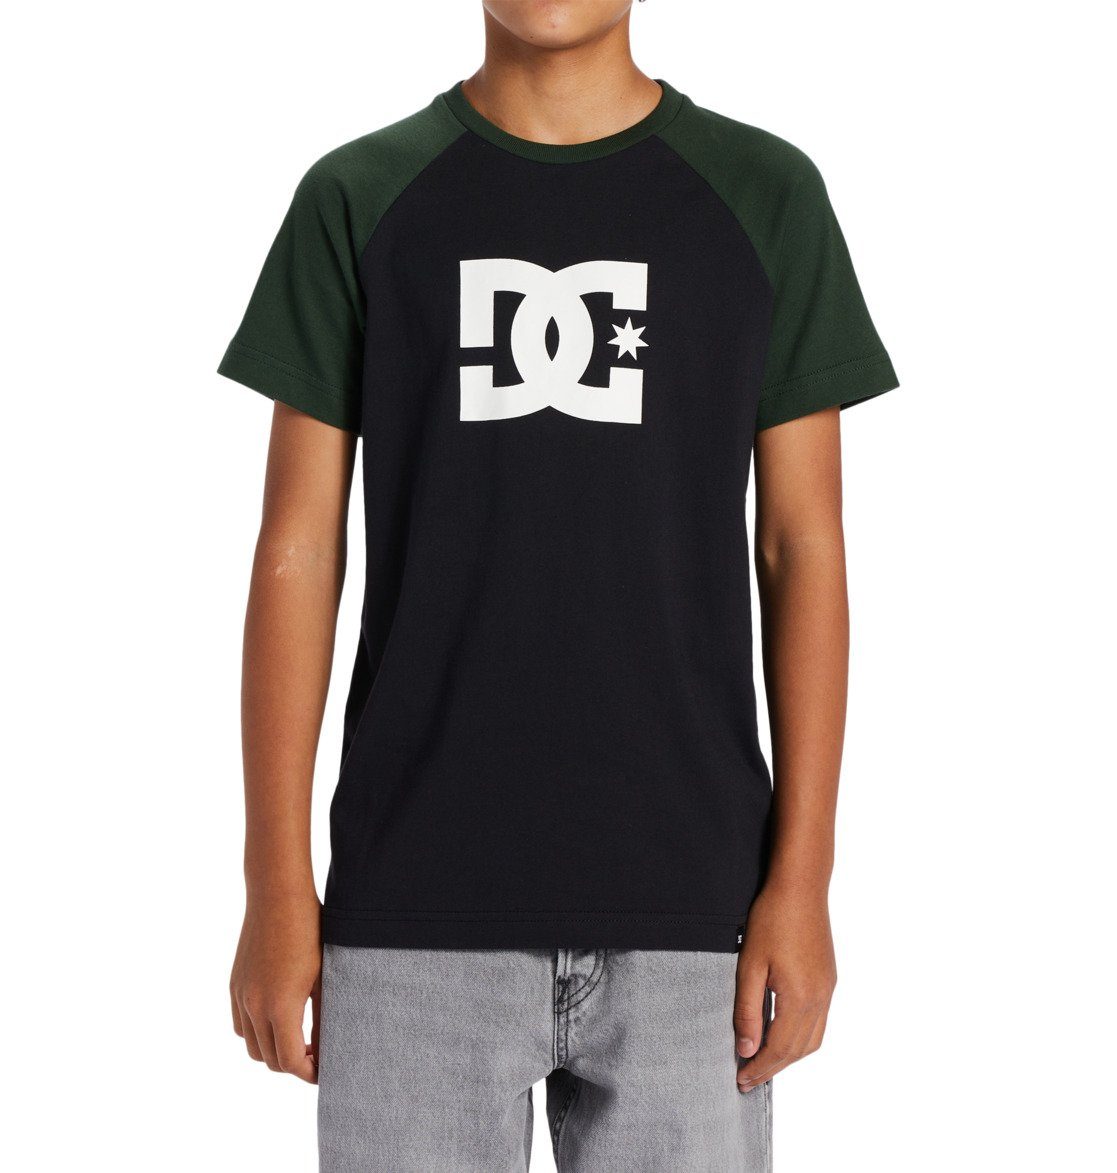 DC Shoes T-Shirt DC Star Black/Sycamore